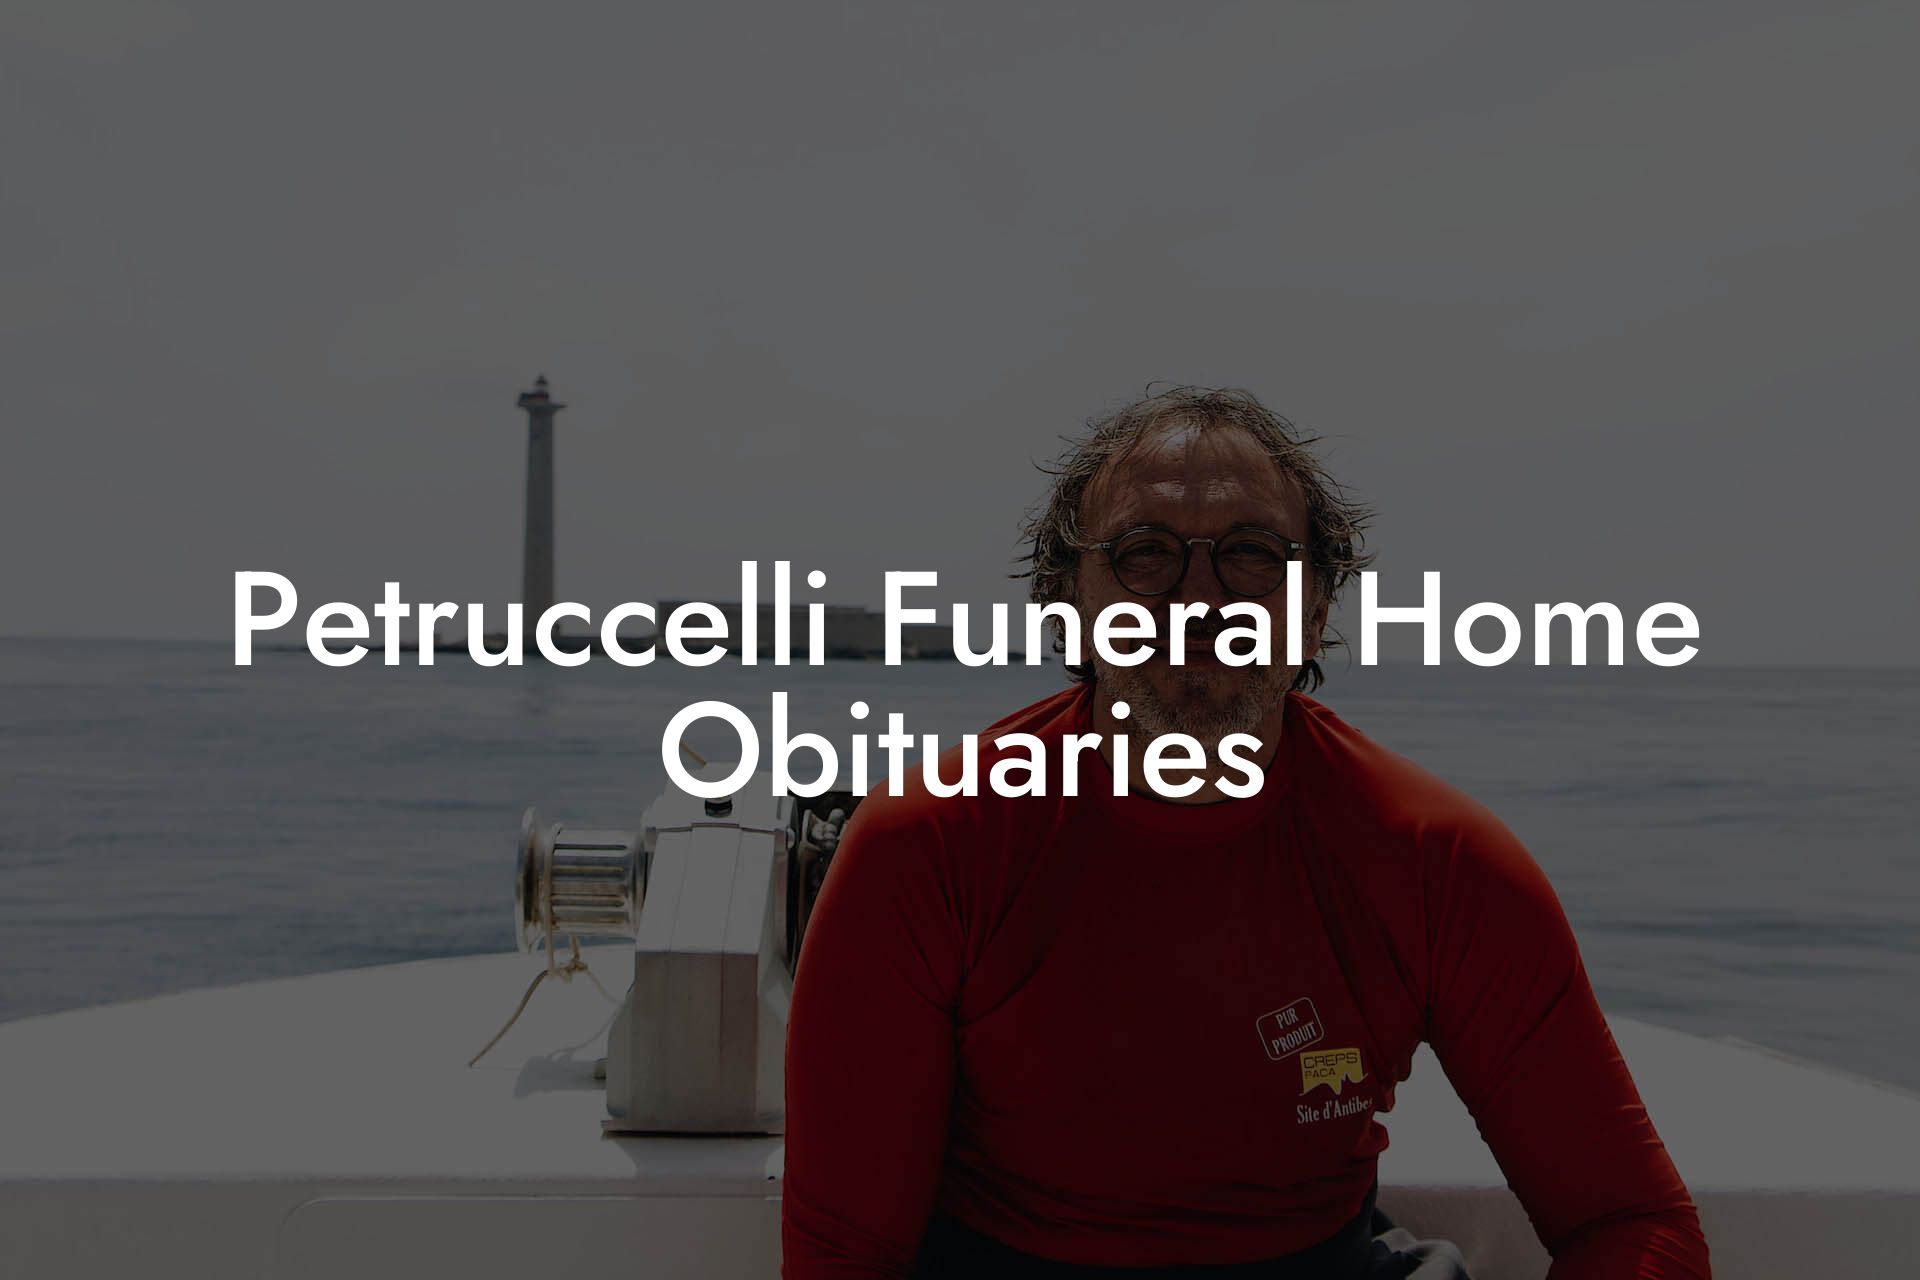 Petruccelli Funeral Home Obituaries